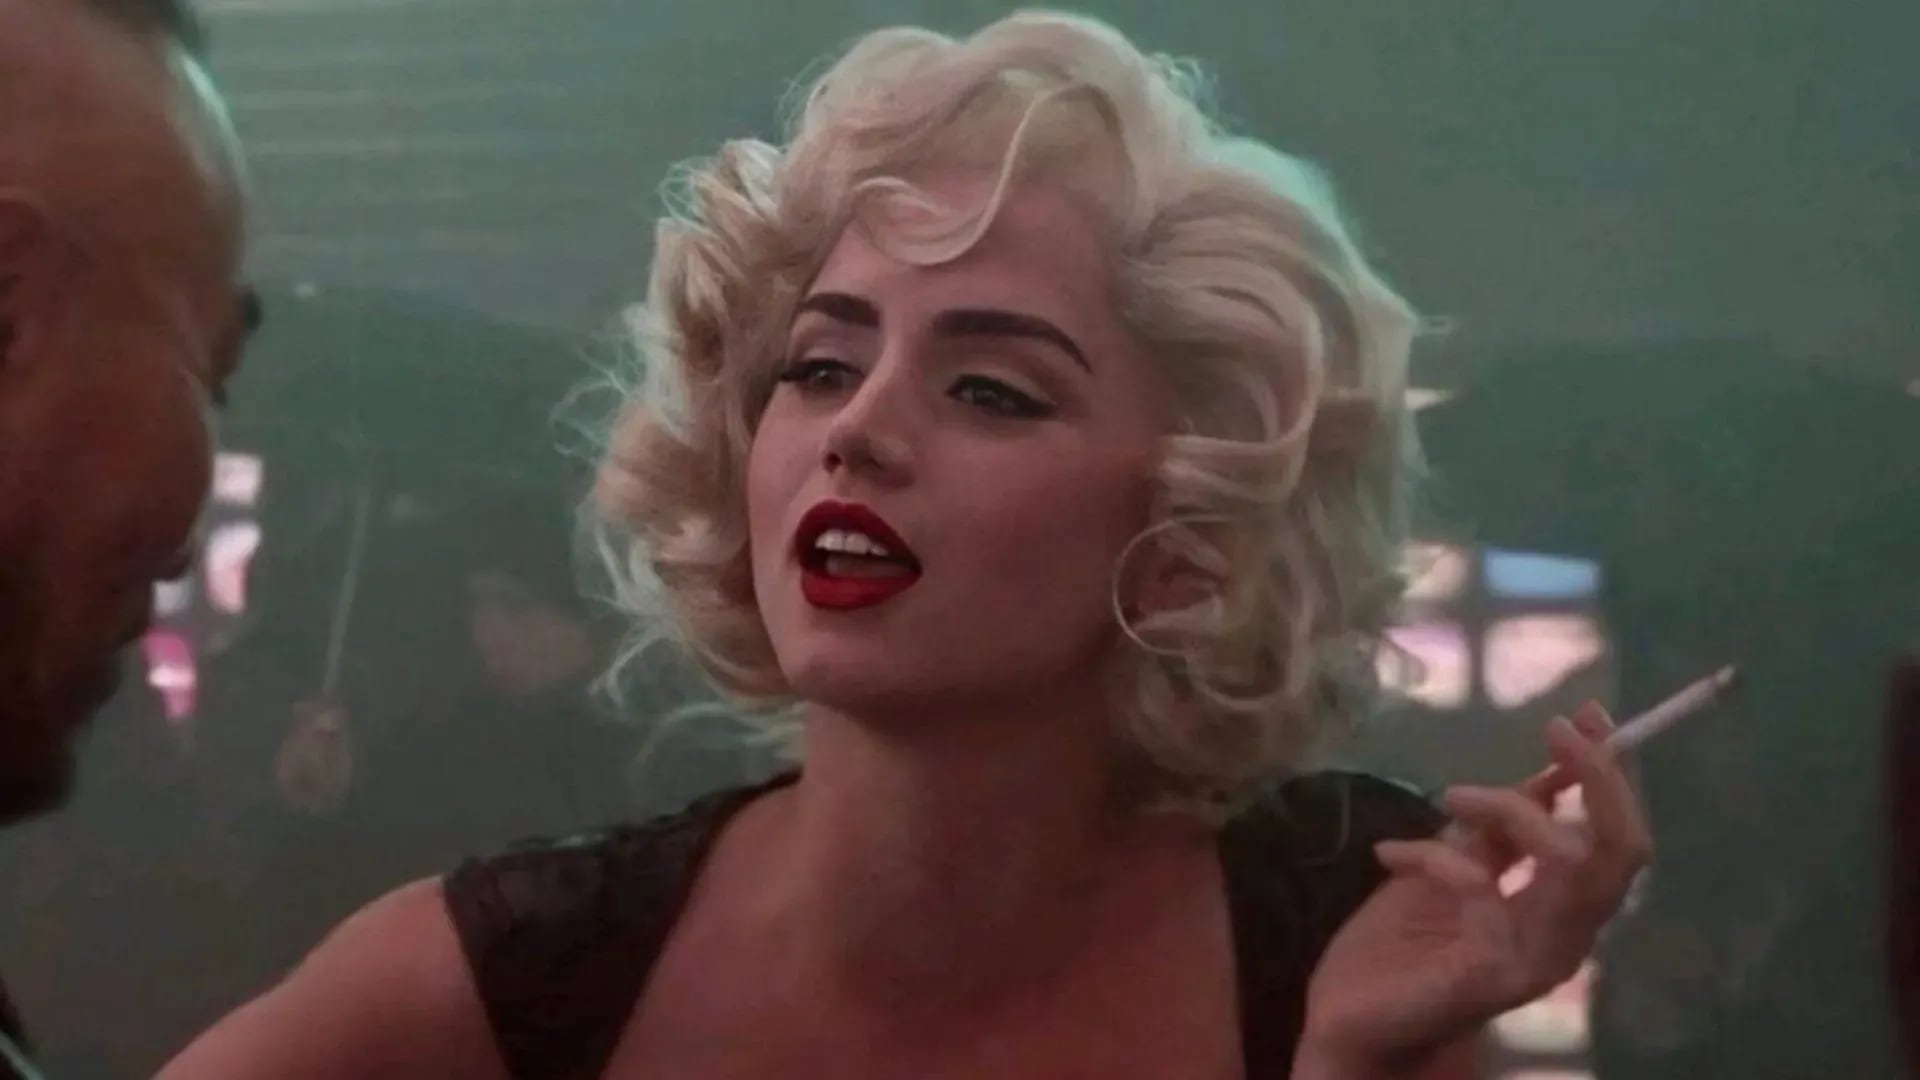 Marilyn Monroe implica un mito difícil de retratar. Netflix se animó a llevar a cabo este biopic, que toma ciertas libertades históricas. Foto: Netflix